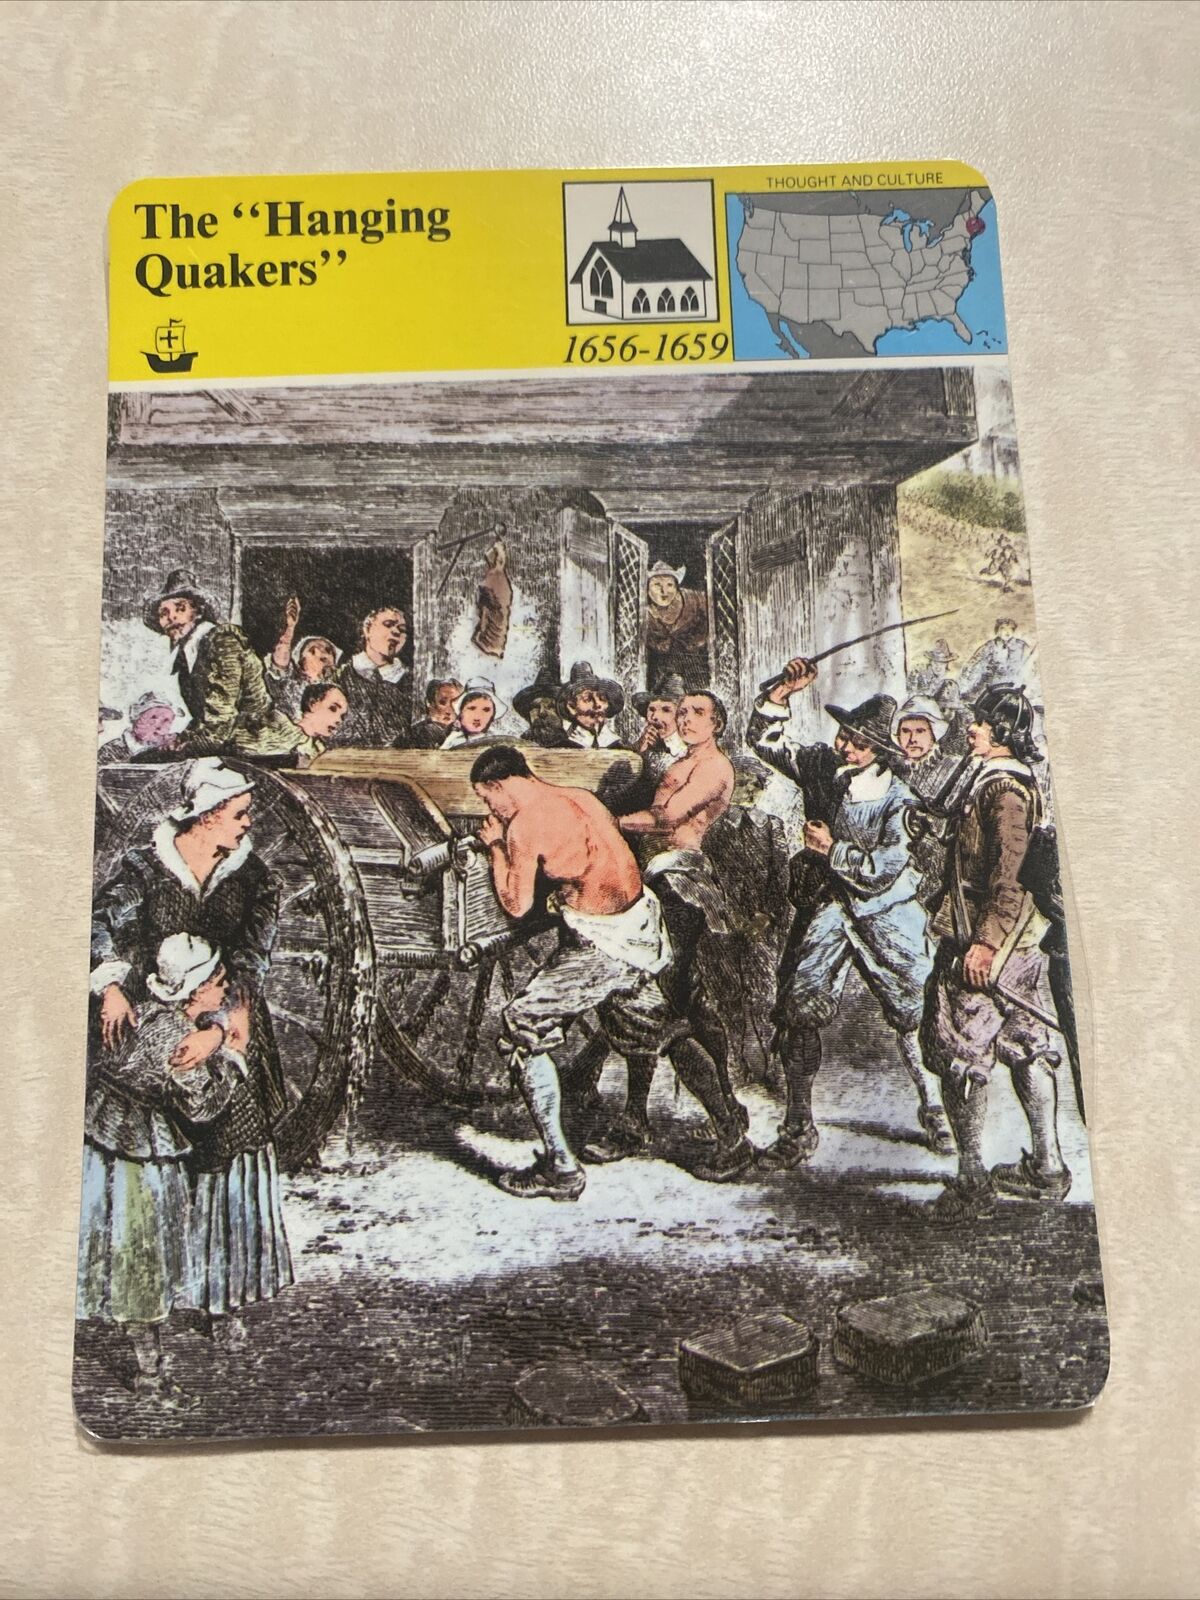 1981 panarizon the hanging quakers card laminated